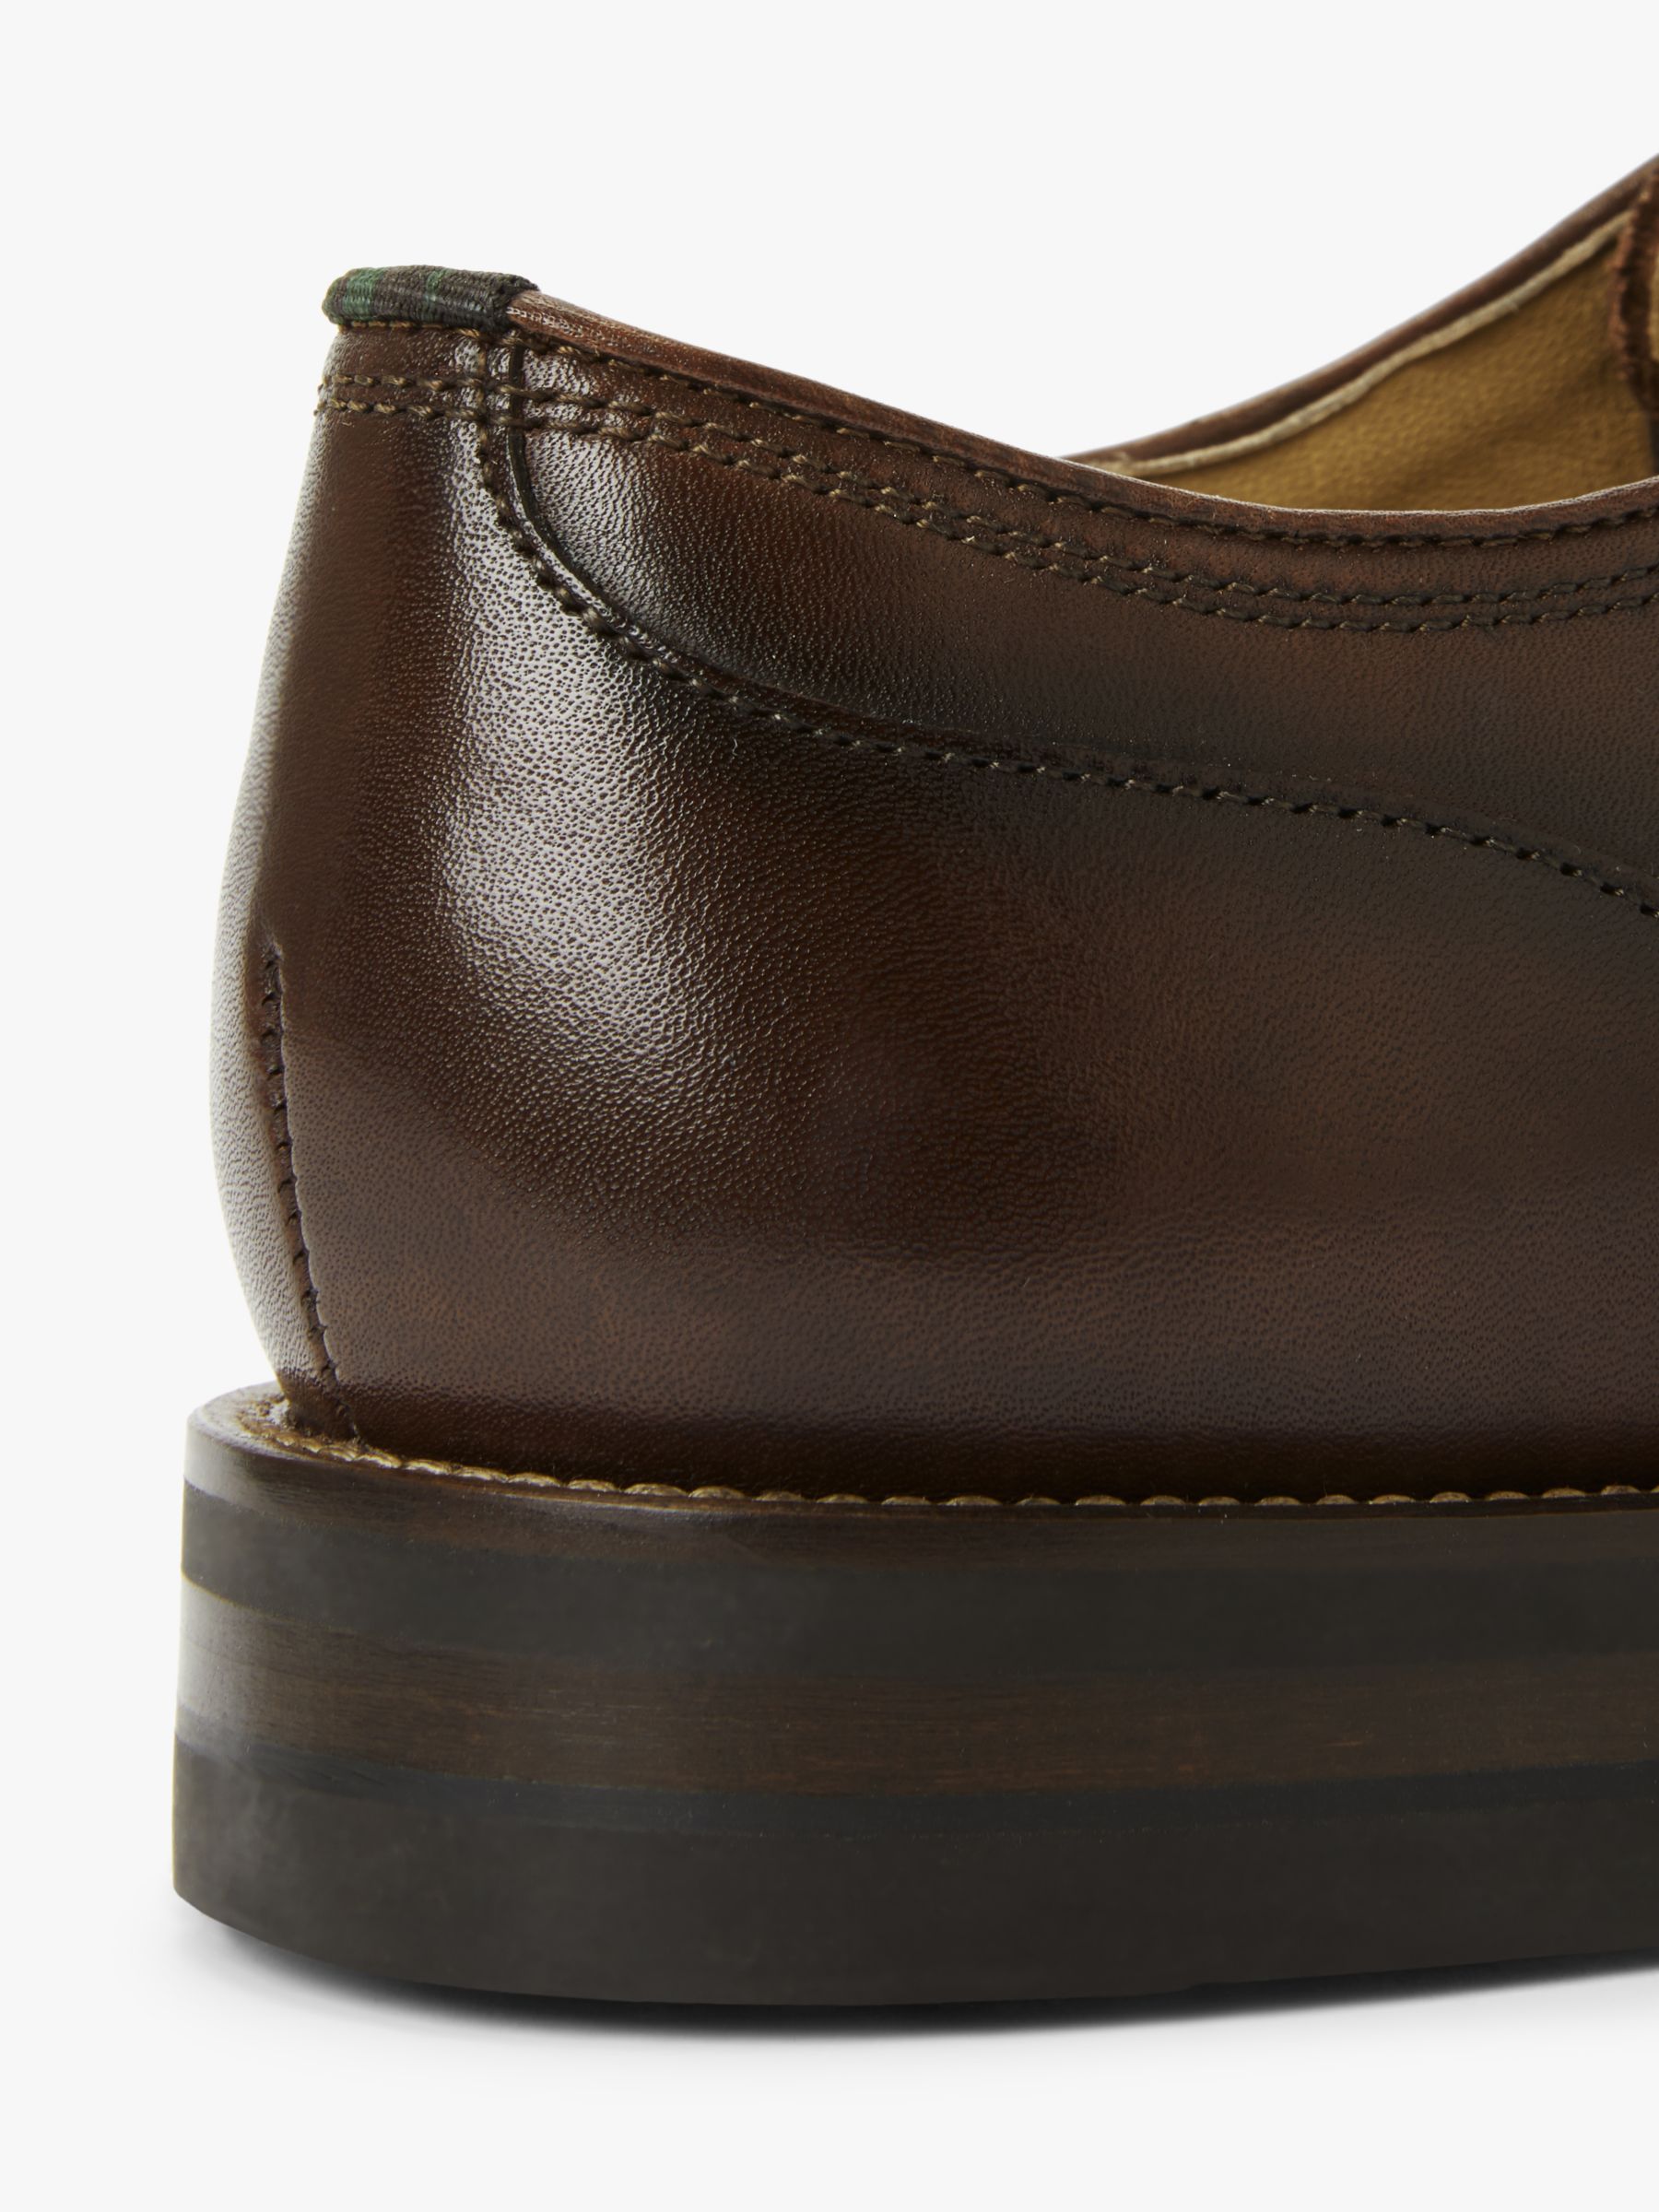 John Lewis Glympton Leather Oxford Shoes, Brown at John Lewis & Partners